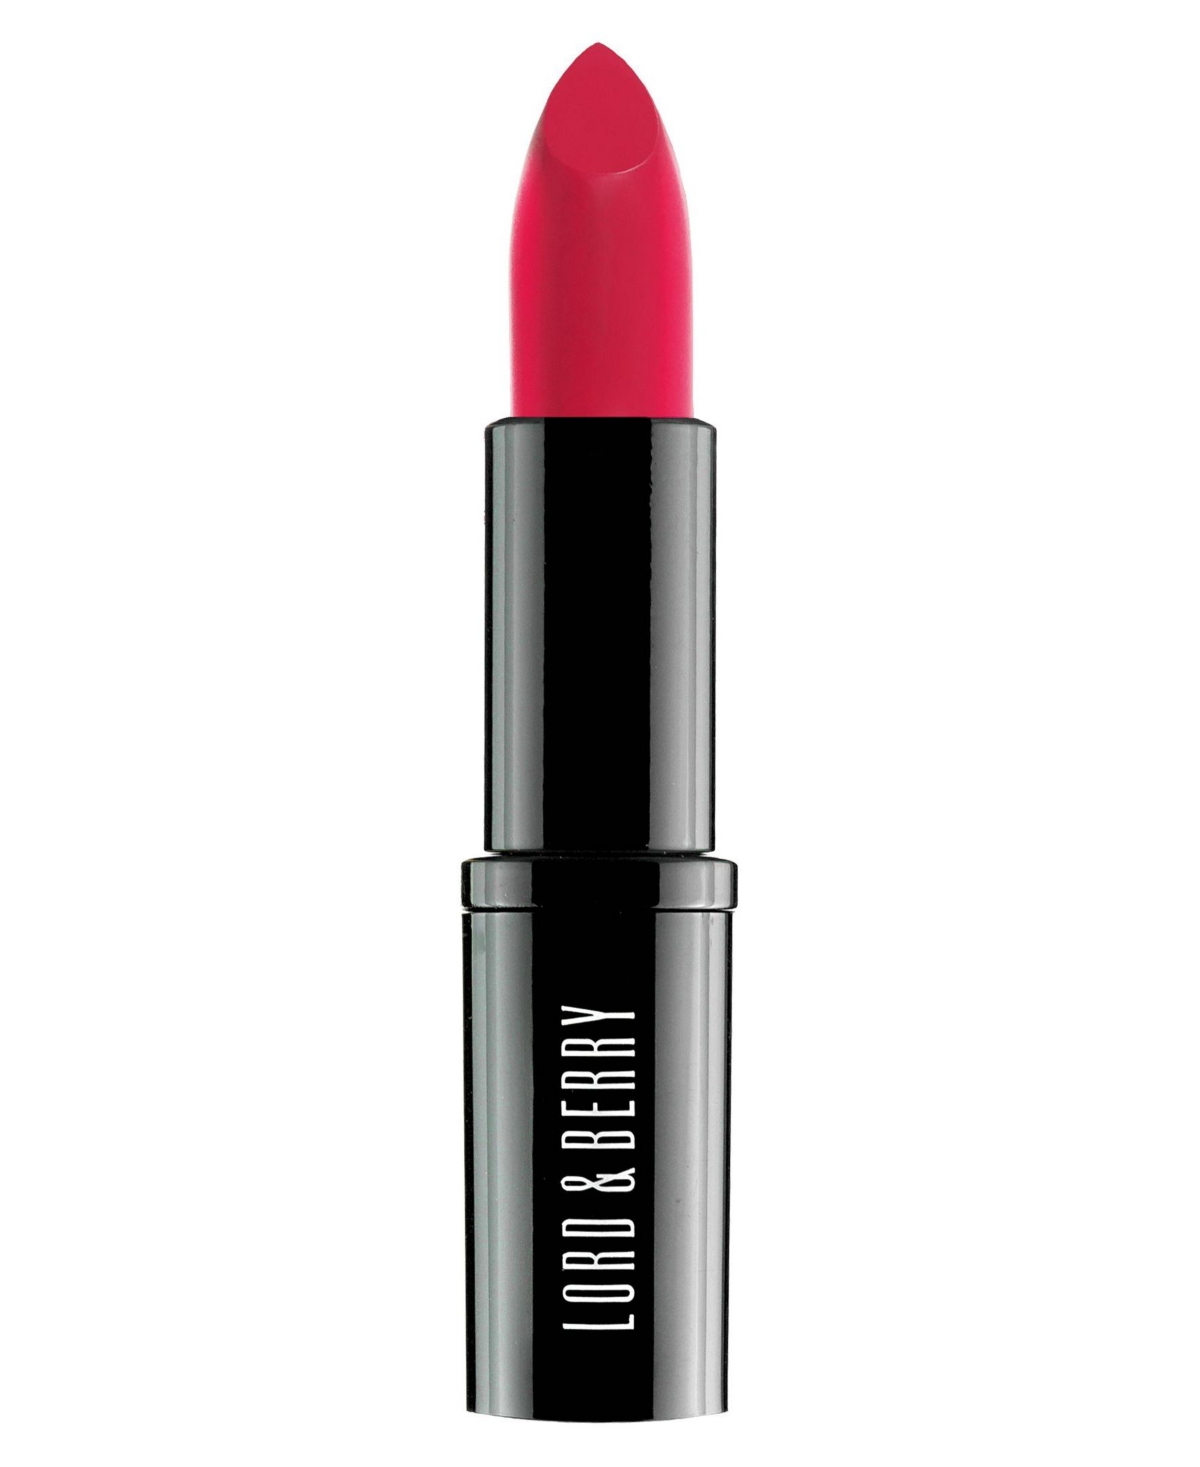 Lord & Berry Vogue Matte Lipstick In Enchantã© - Medium Berry Fuchsia